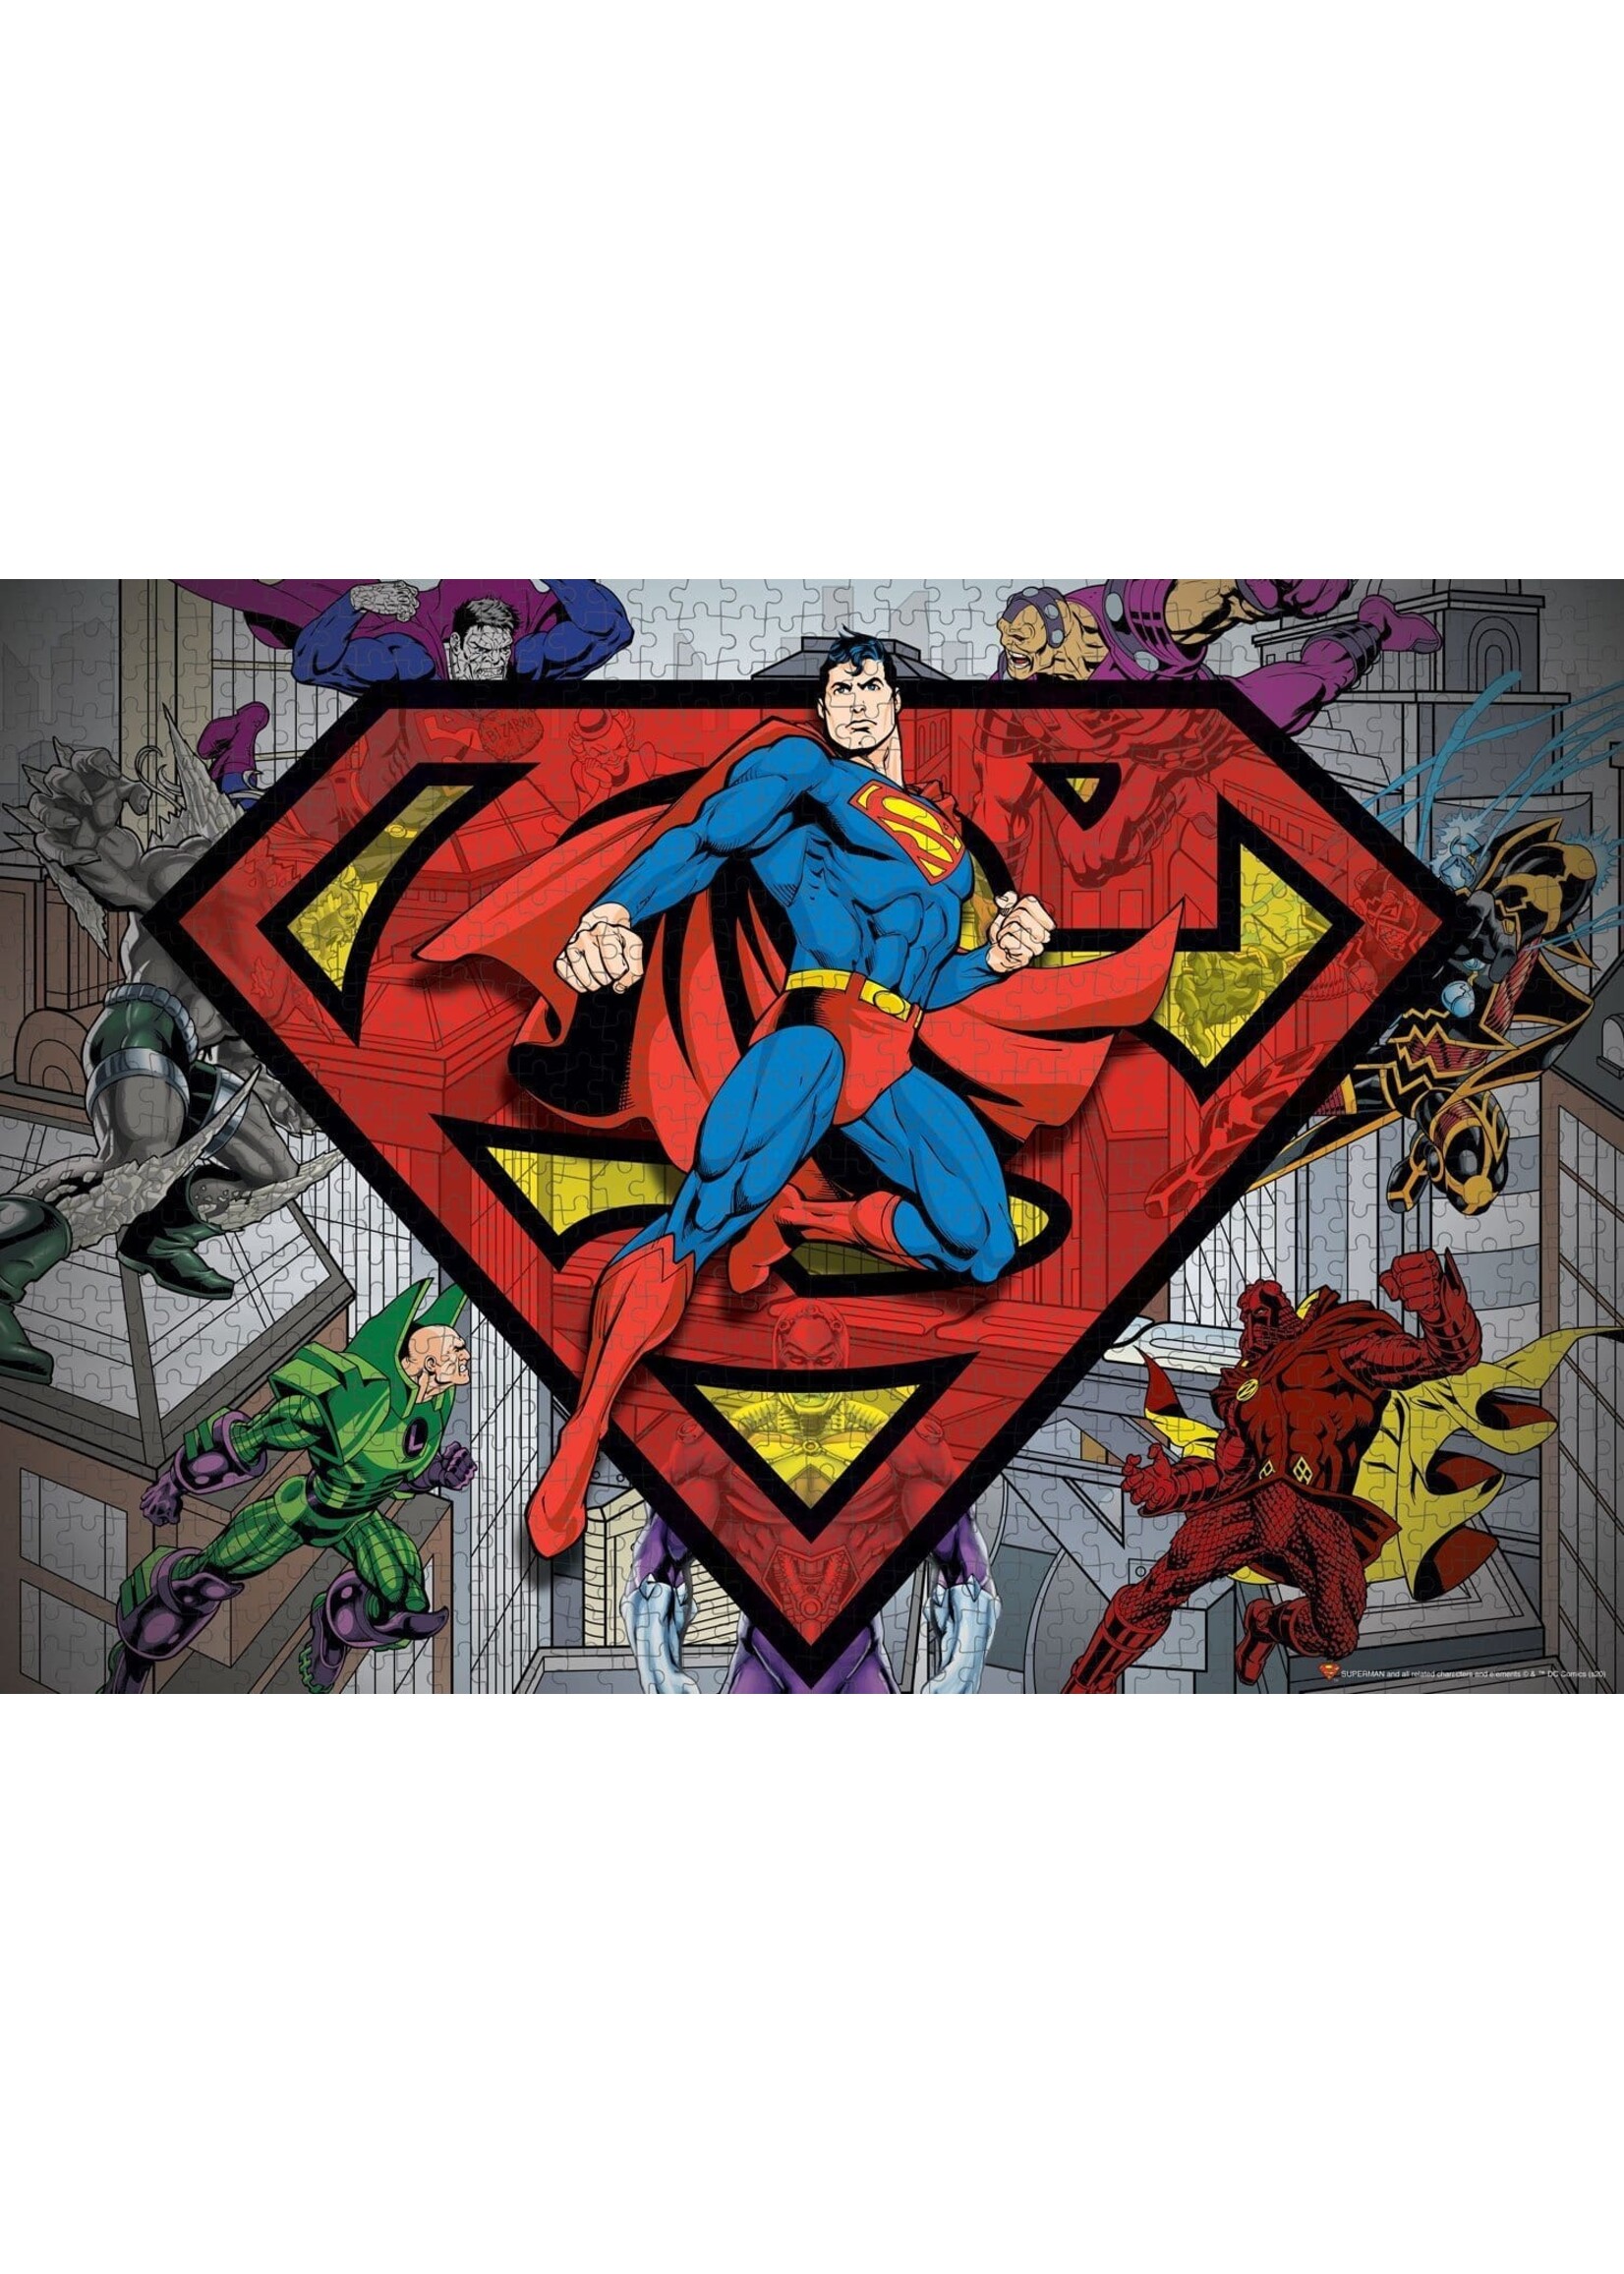 Paper house productions Superman and Villains 1000 Piece Puzzle